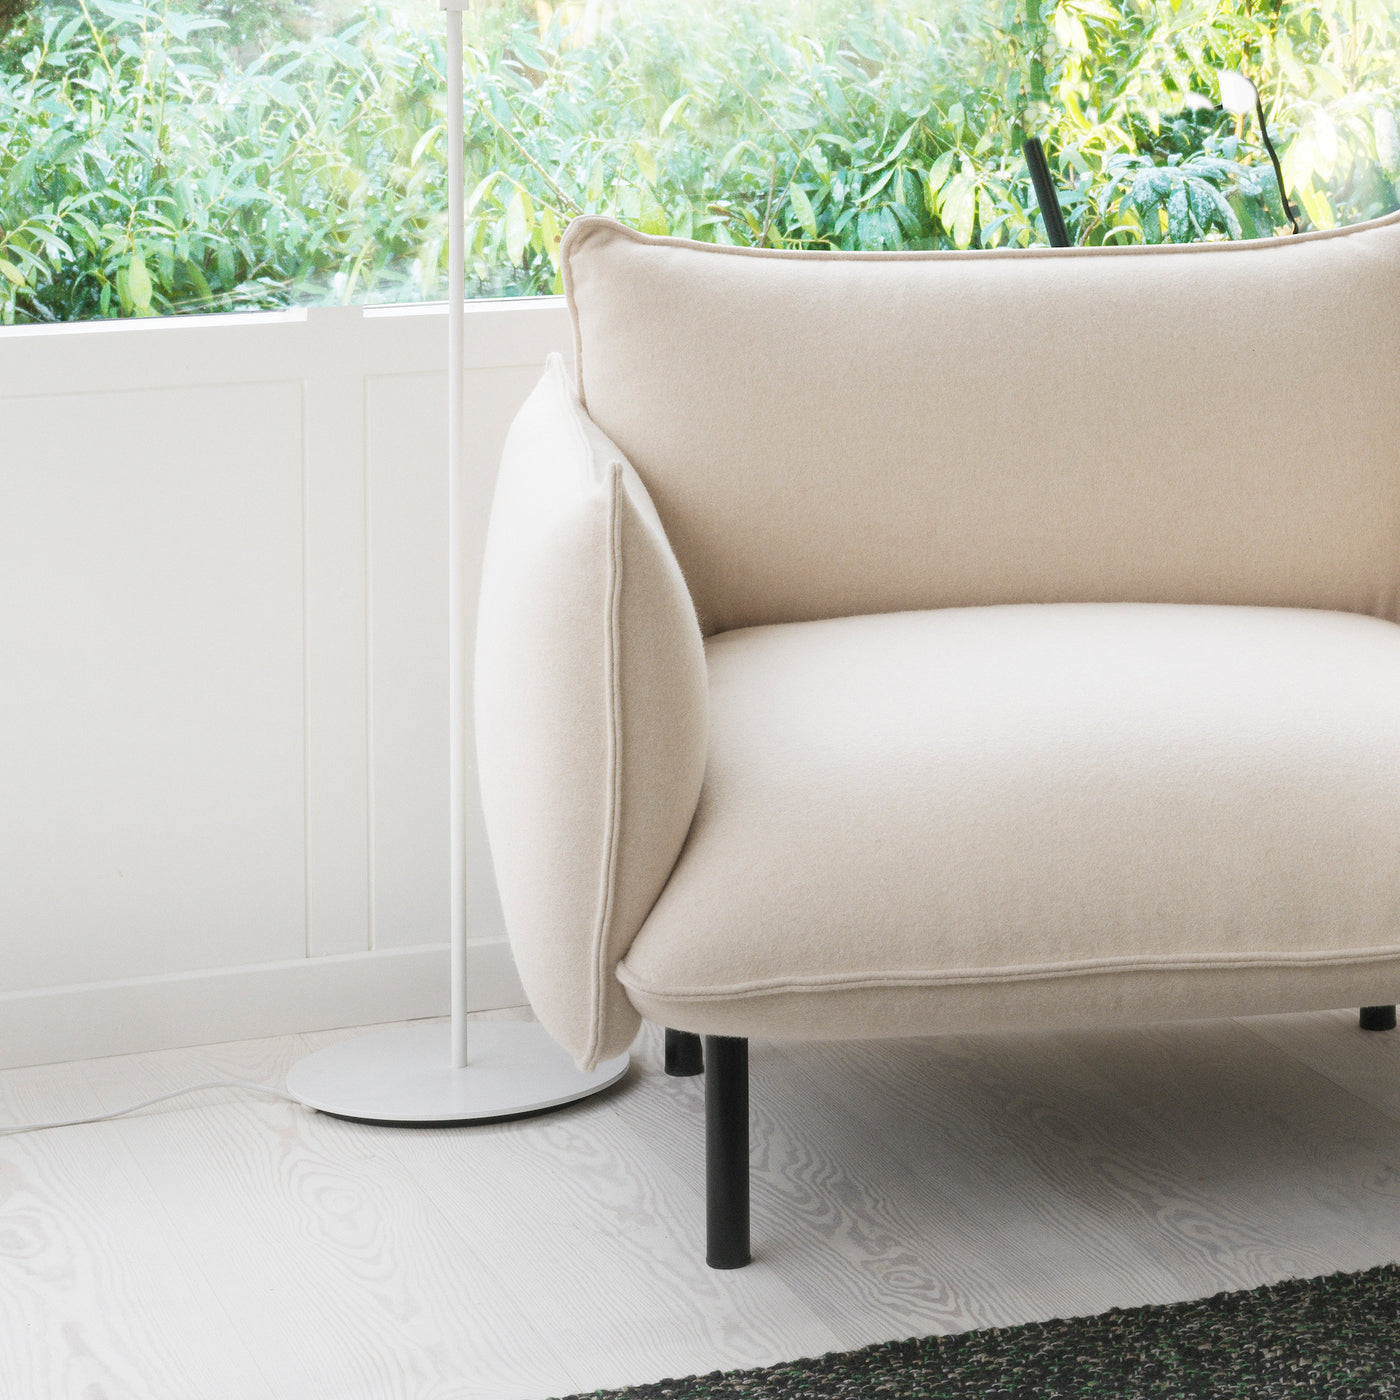 Normann Copenhagen Ark 4 Seater Corner Modular Sofa at someday designs. #colour_divina-md-203